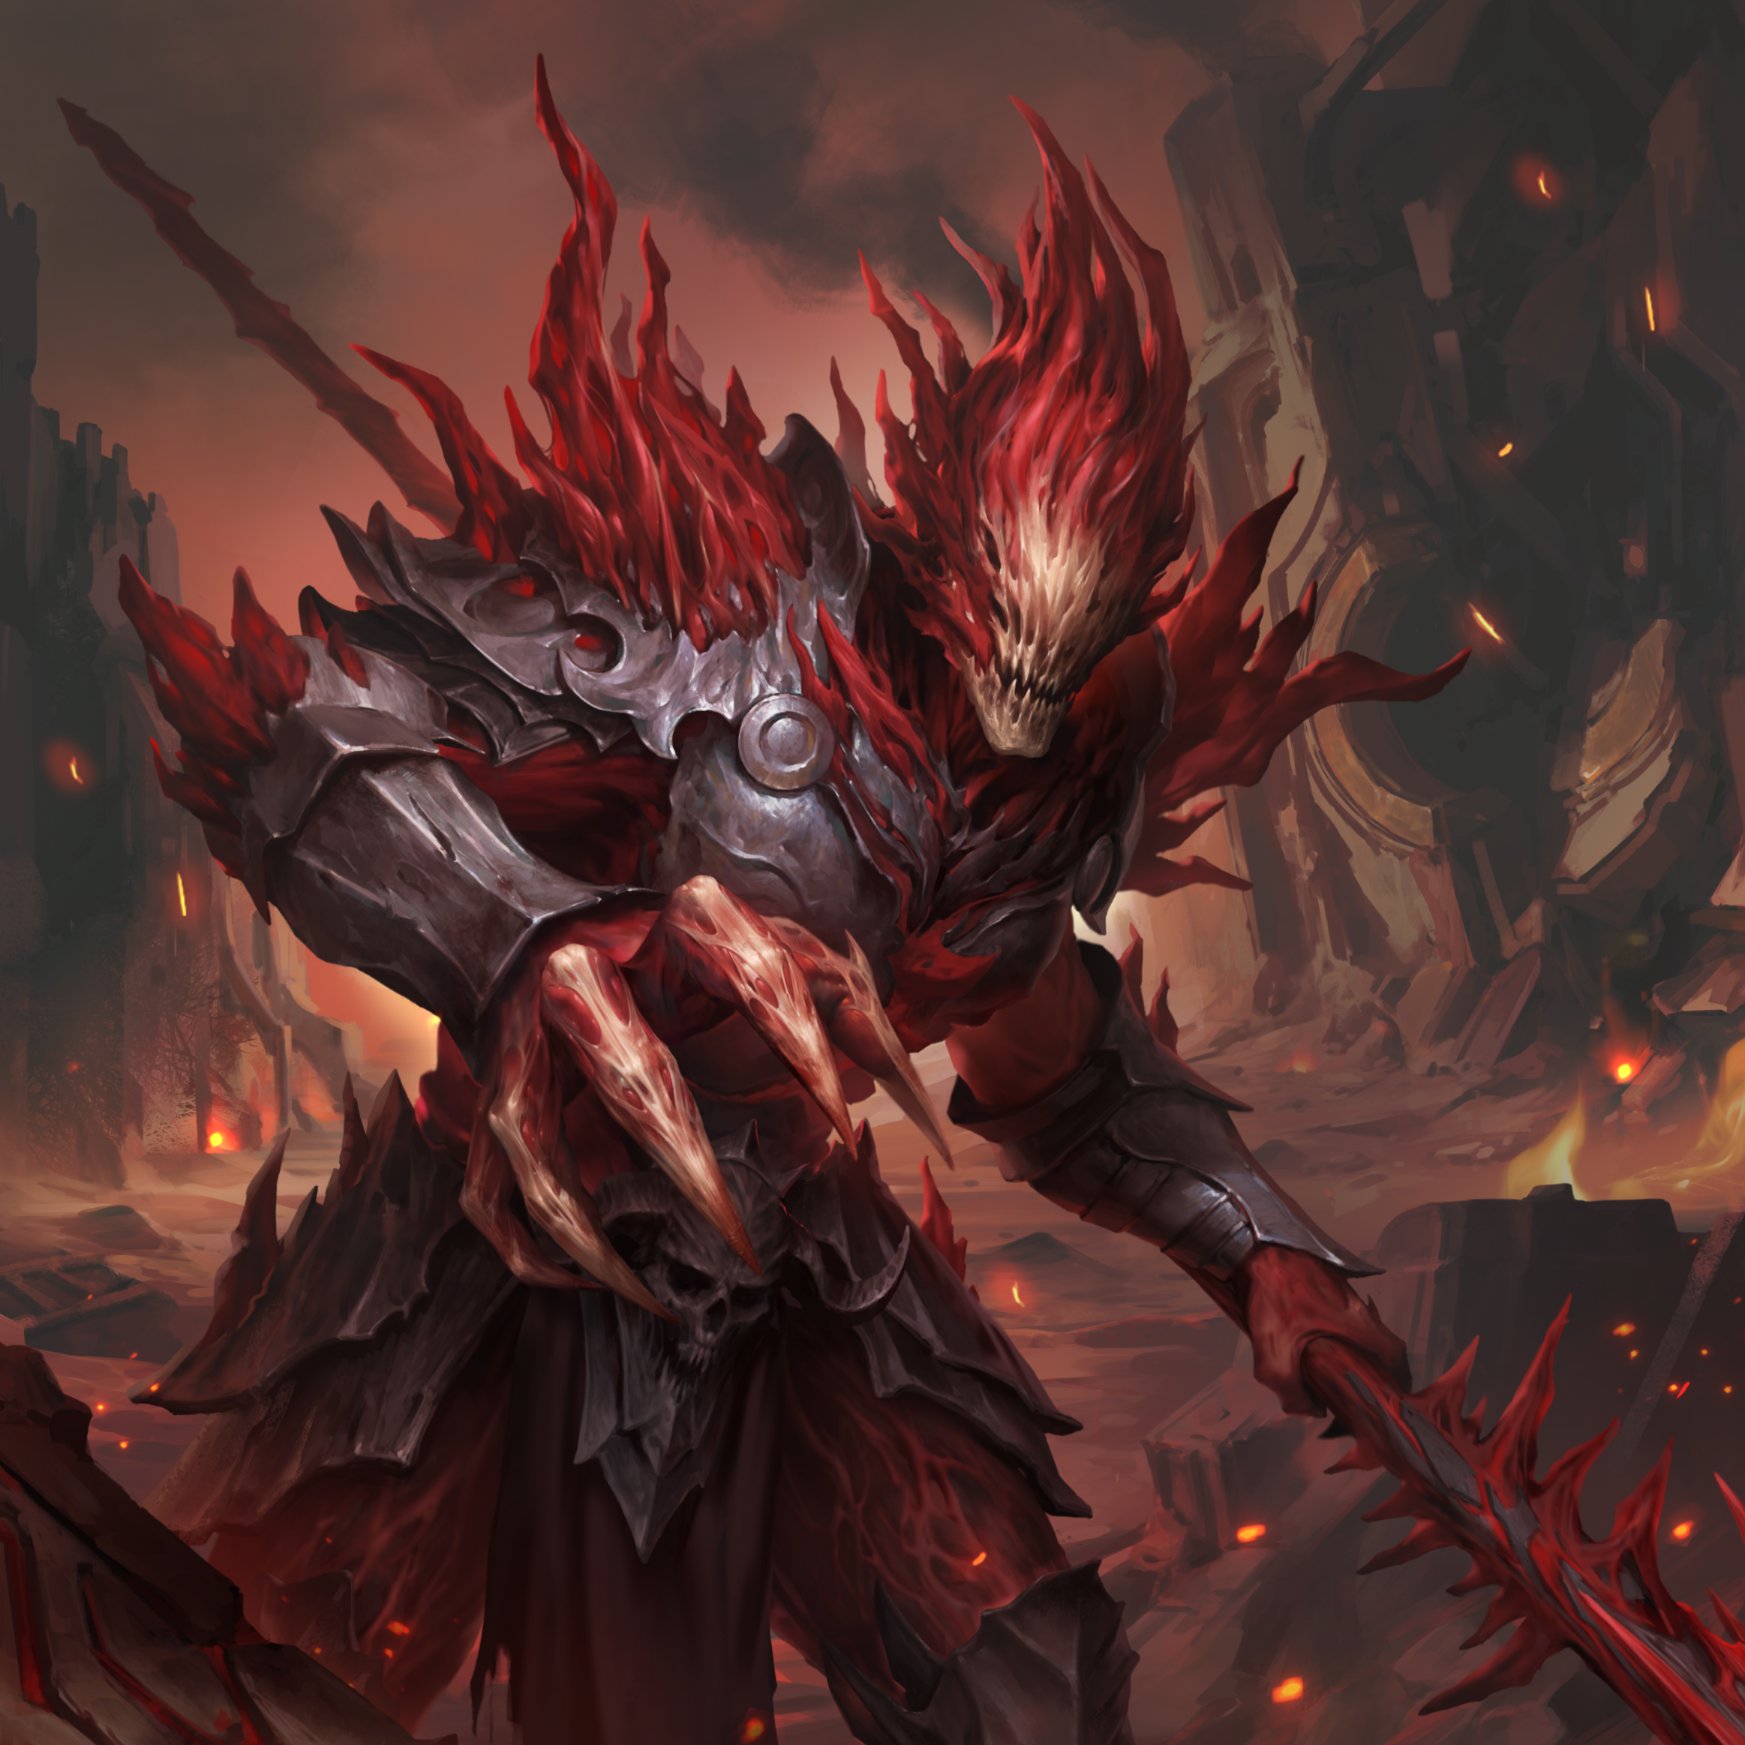 Diablo Immortal 4th Major Content Update Notes: New Zone, Inferno